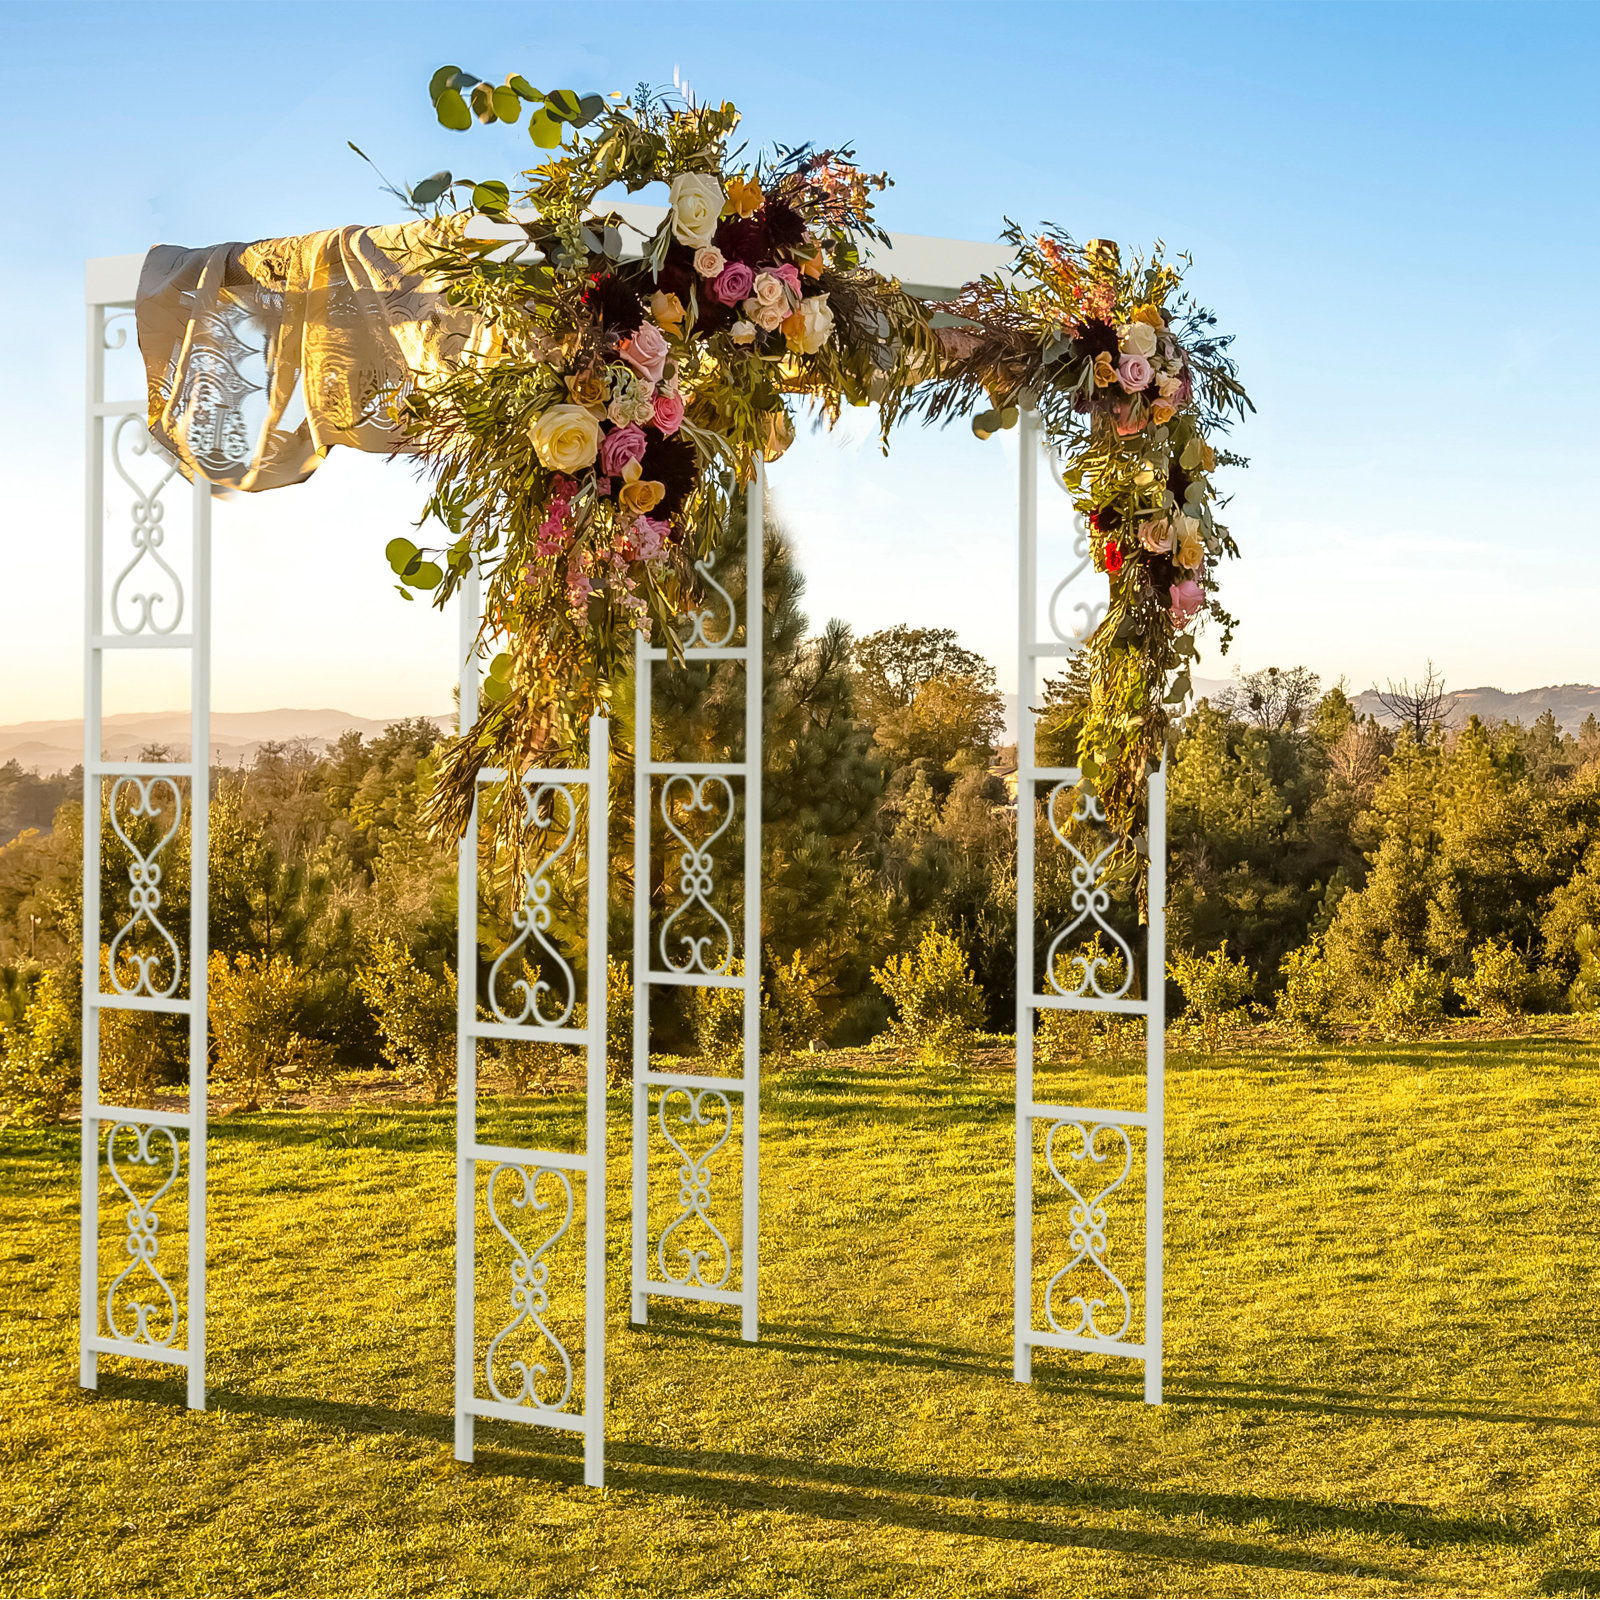 Acrylic Clear Wedding Centerpiece Column Flower Stand